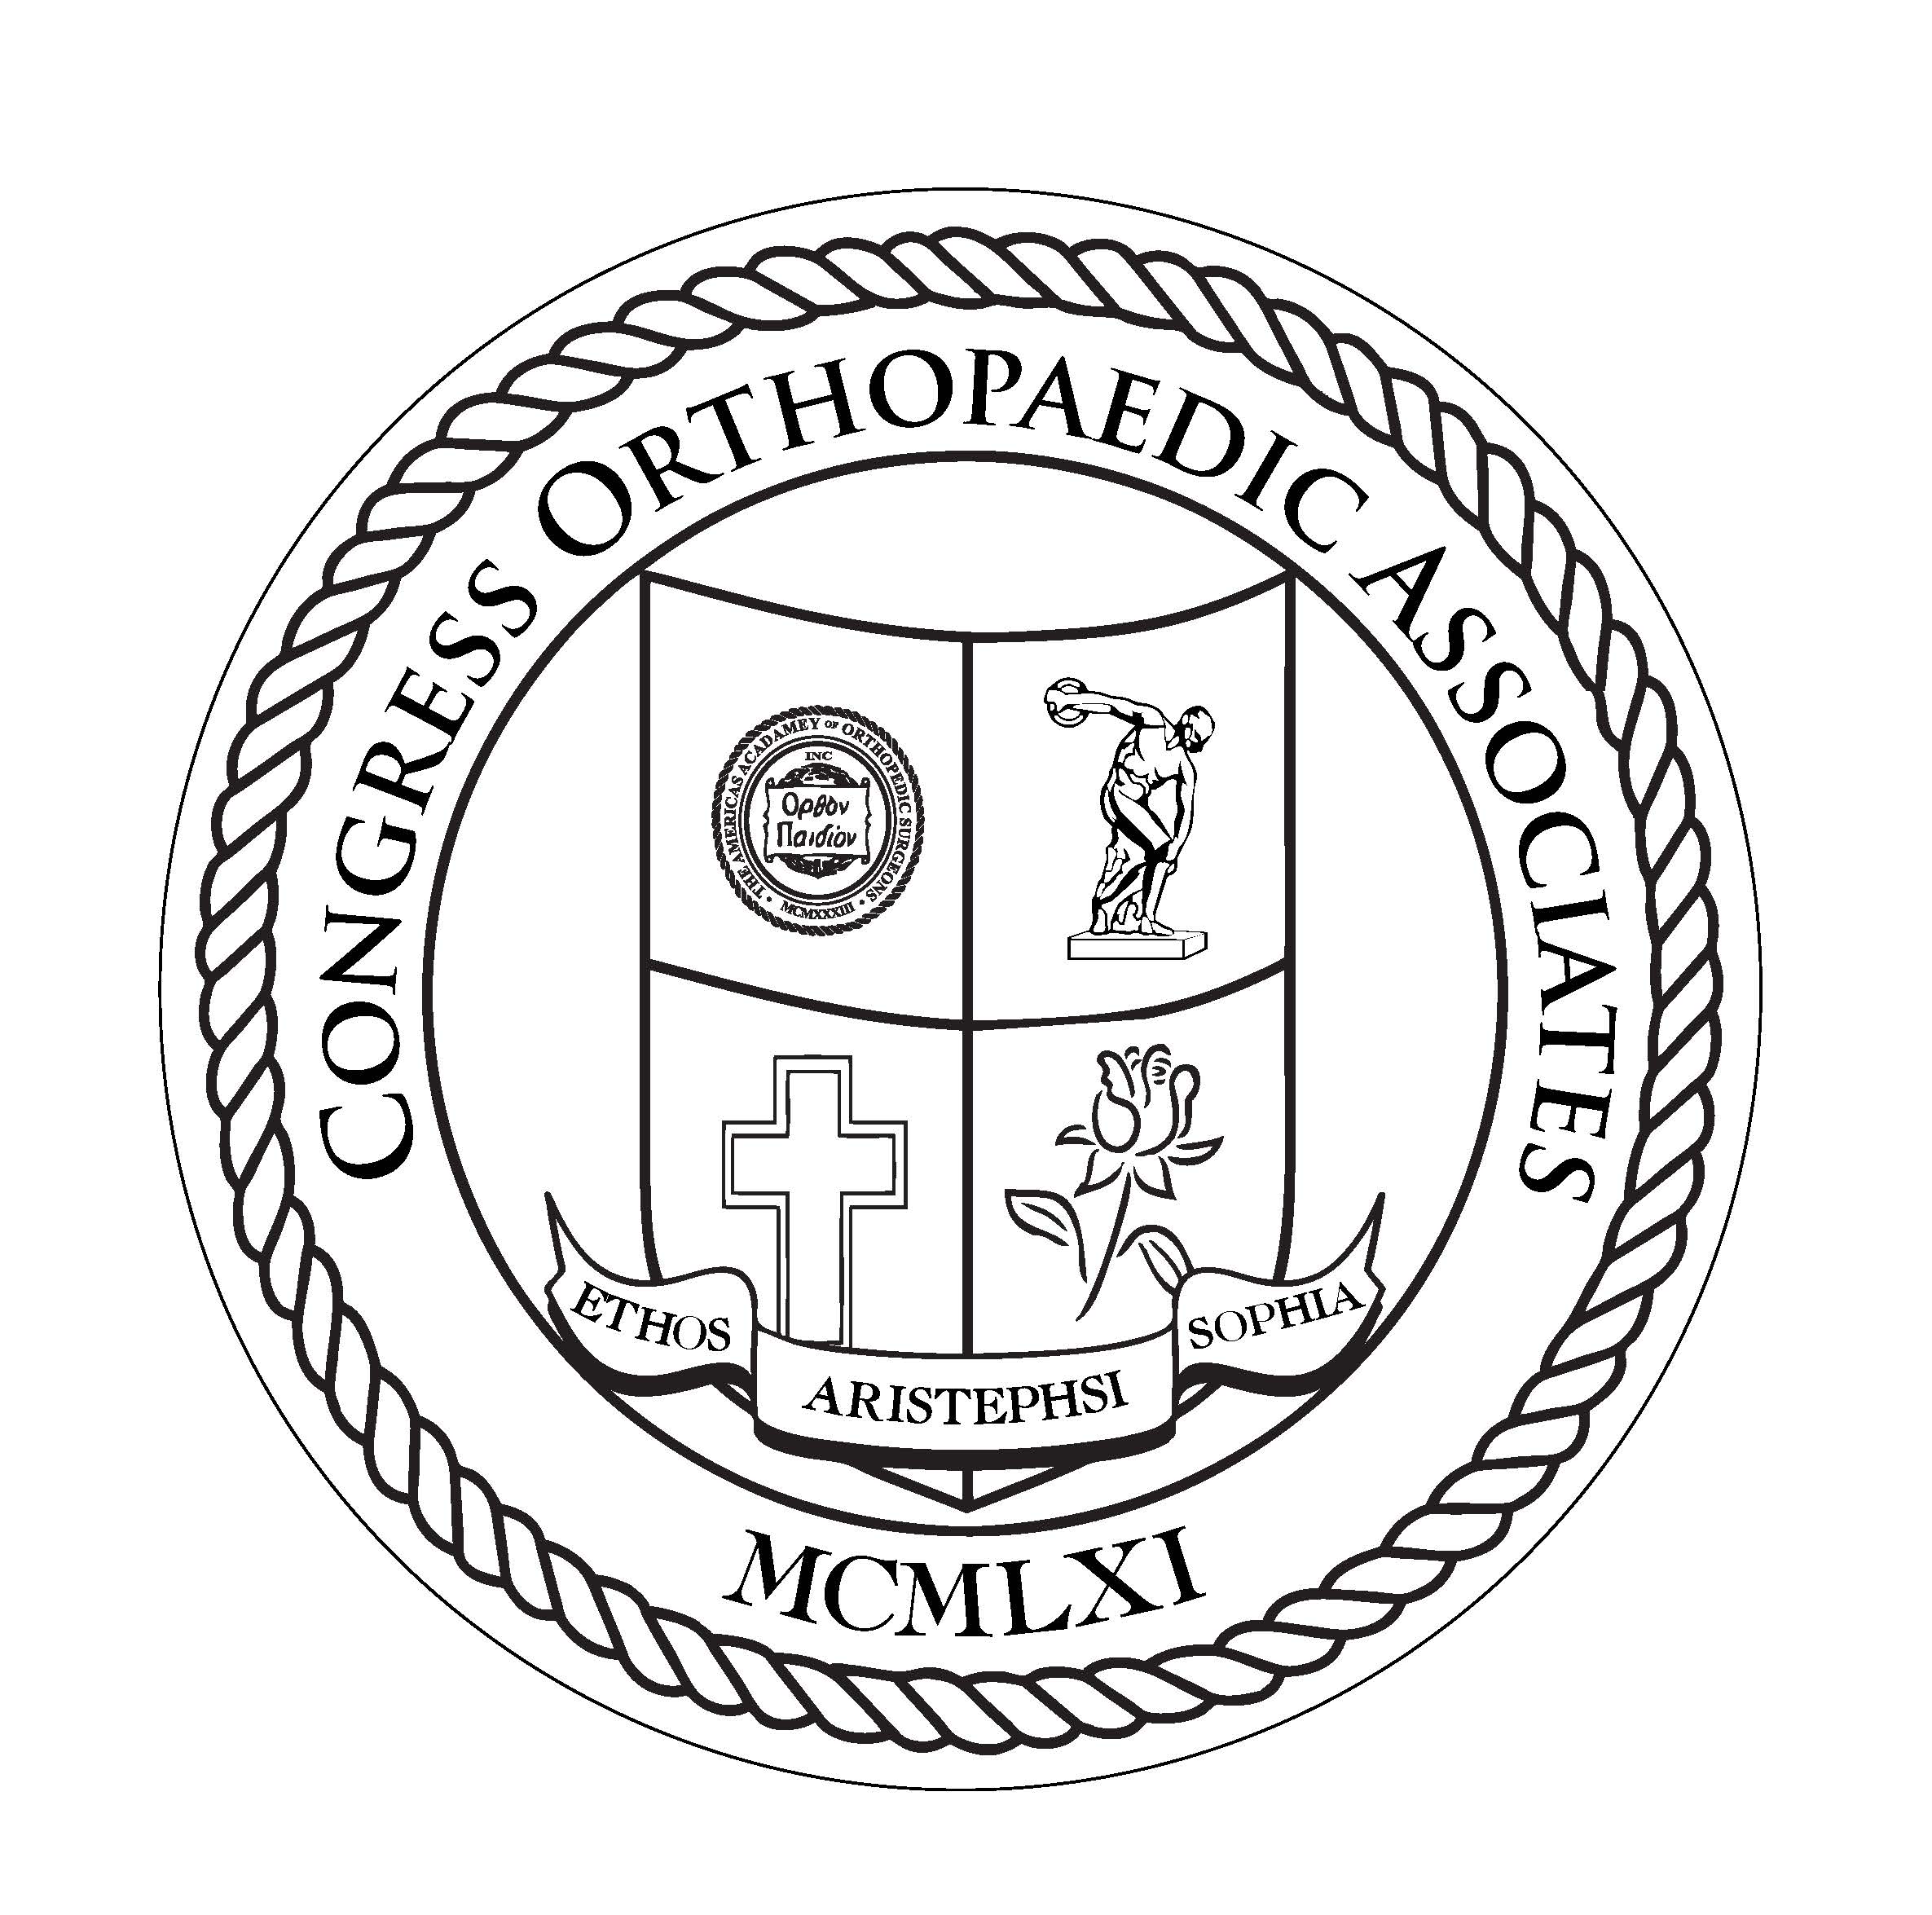 Smcc Logo - Our Members